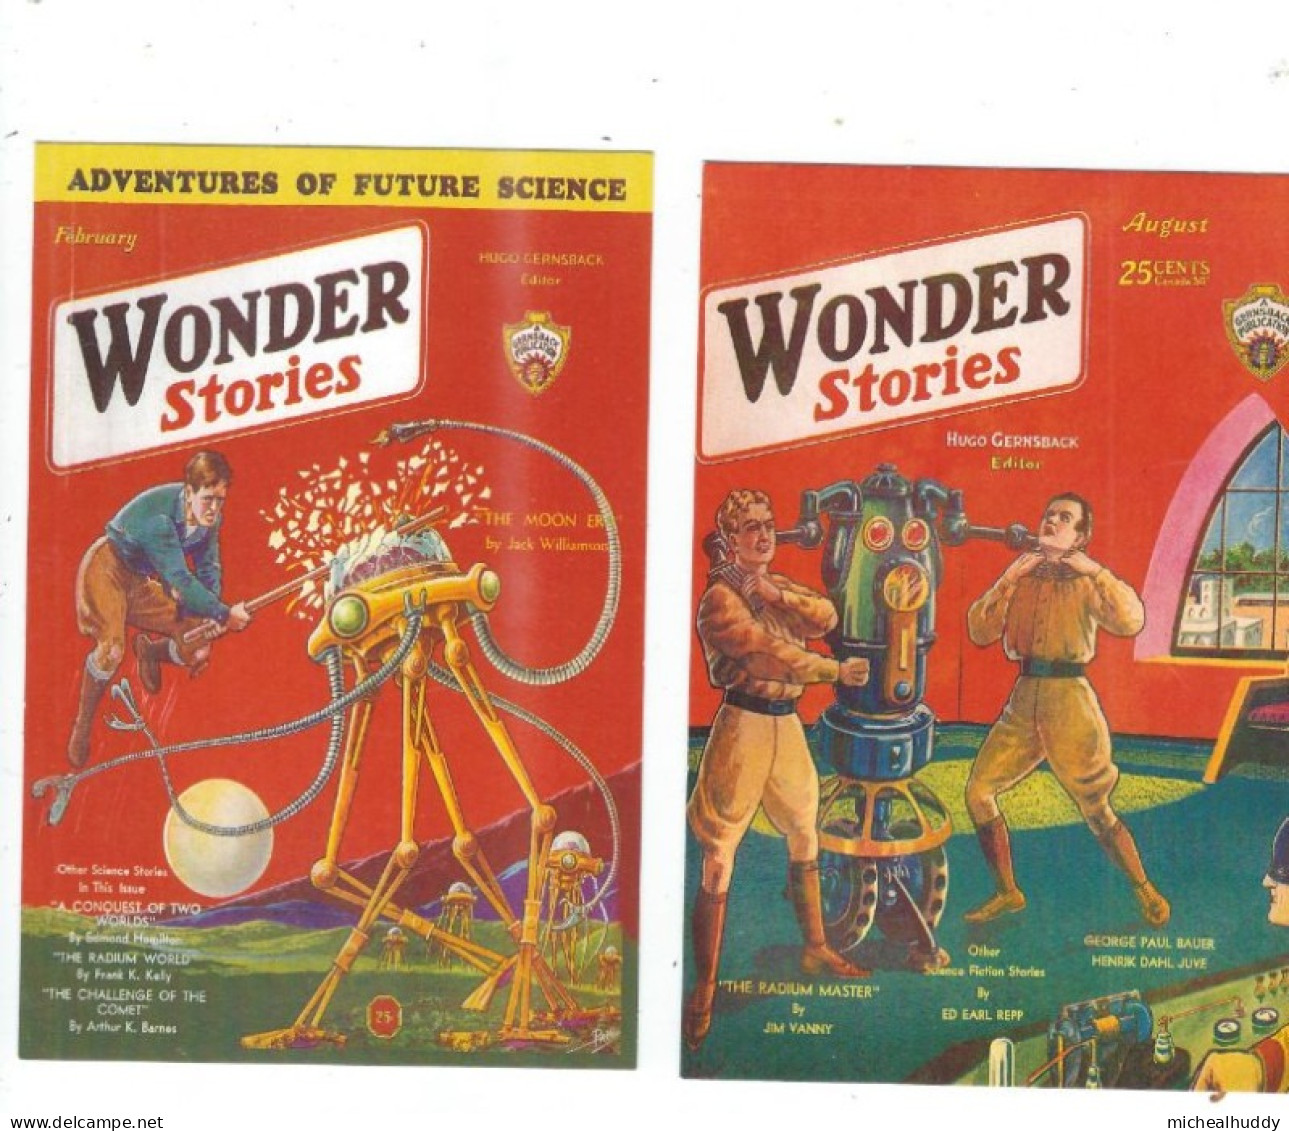 AMERCAN COMIC BOOK  ART COVERS ON 2 POSTCARDS  SCIENCE  FICTION   LOT 7 - Contemporánea (desde 1950)